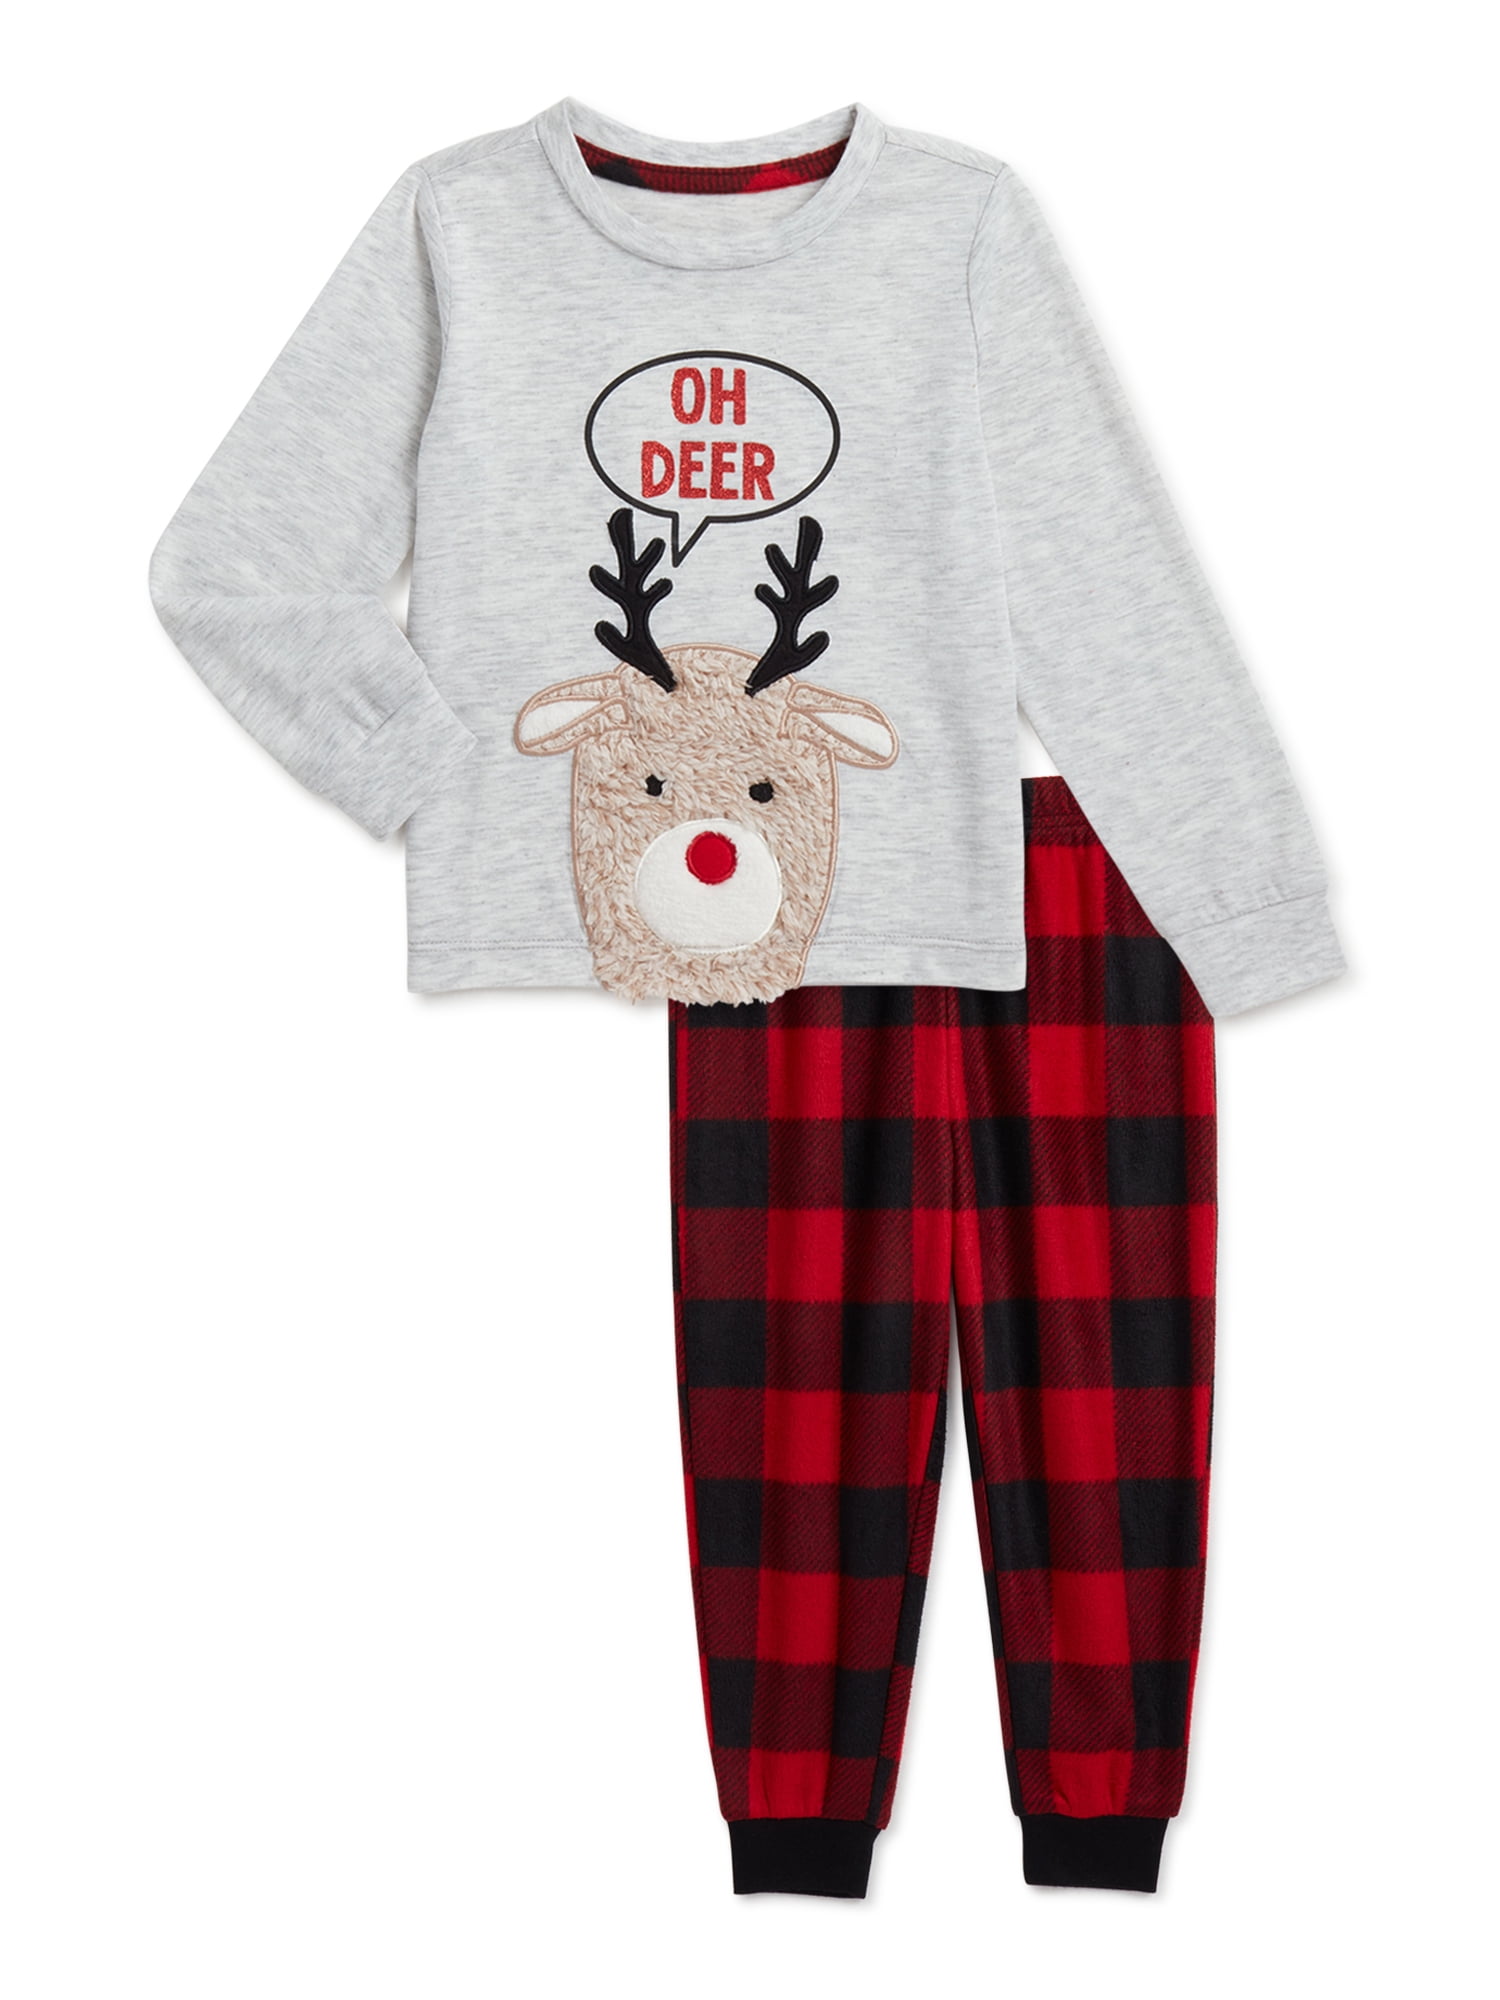 LLDA Family Matching Christmas Pajamas Sets Xmas Deer Holiday Sleepwear Cotton Kids 2T